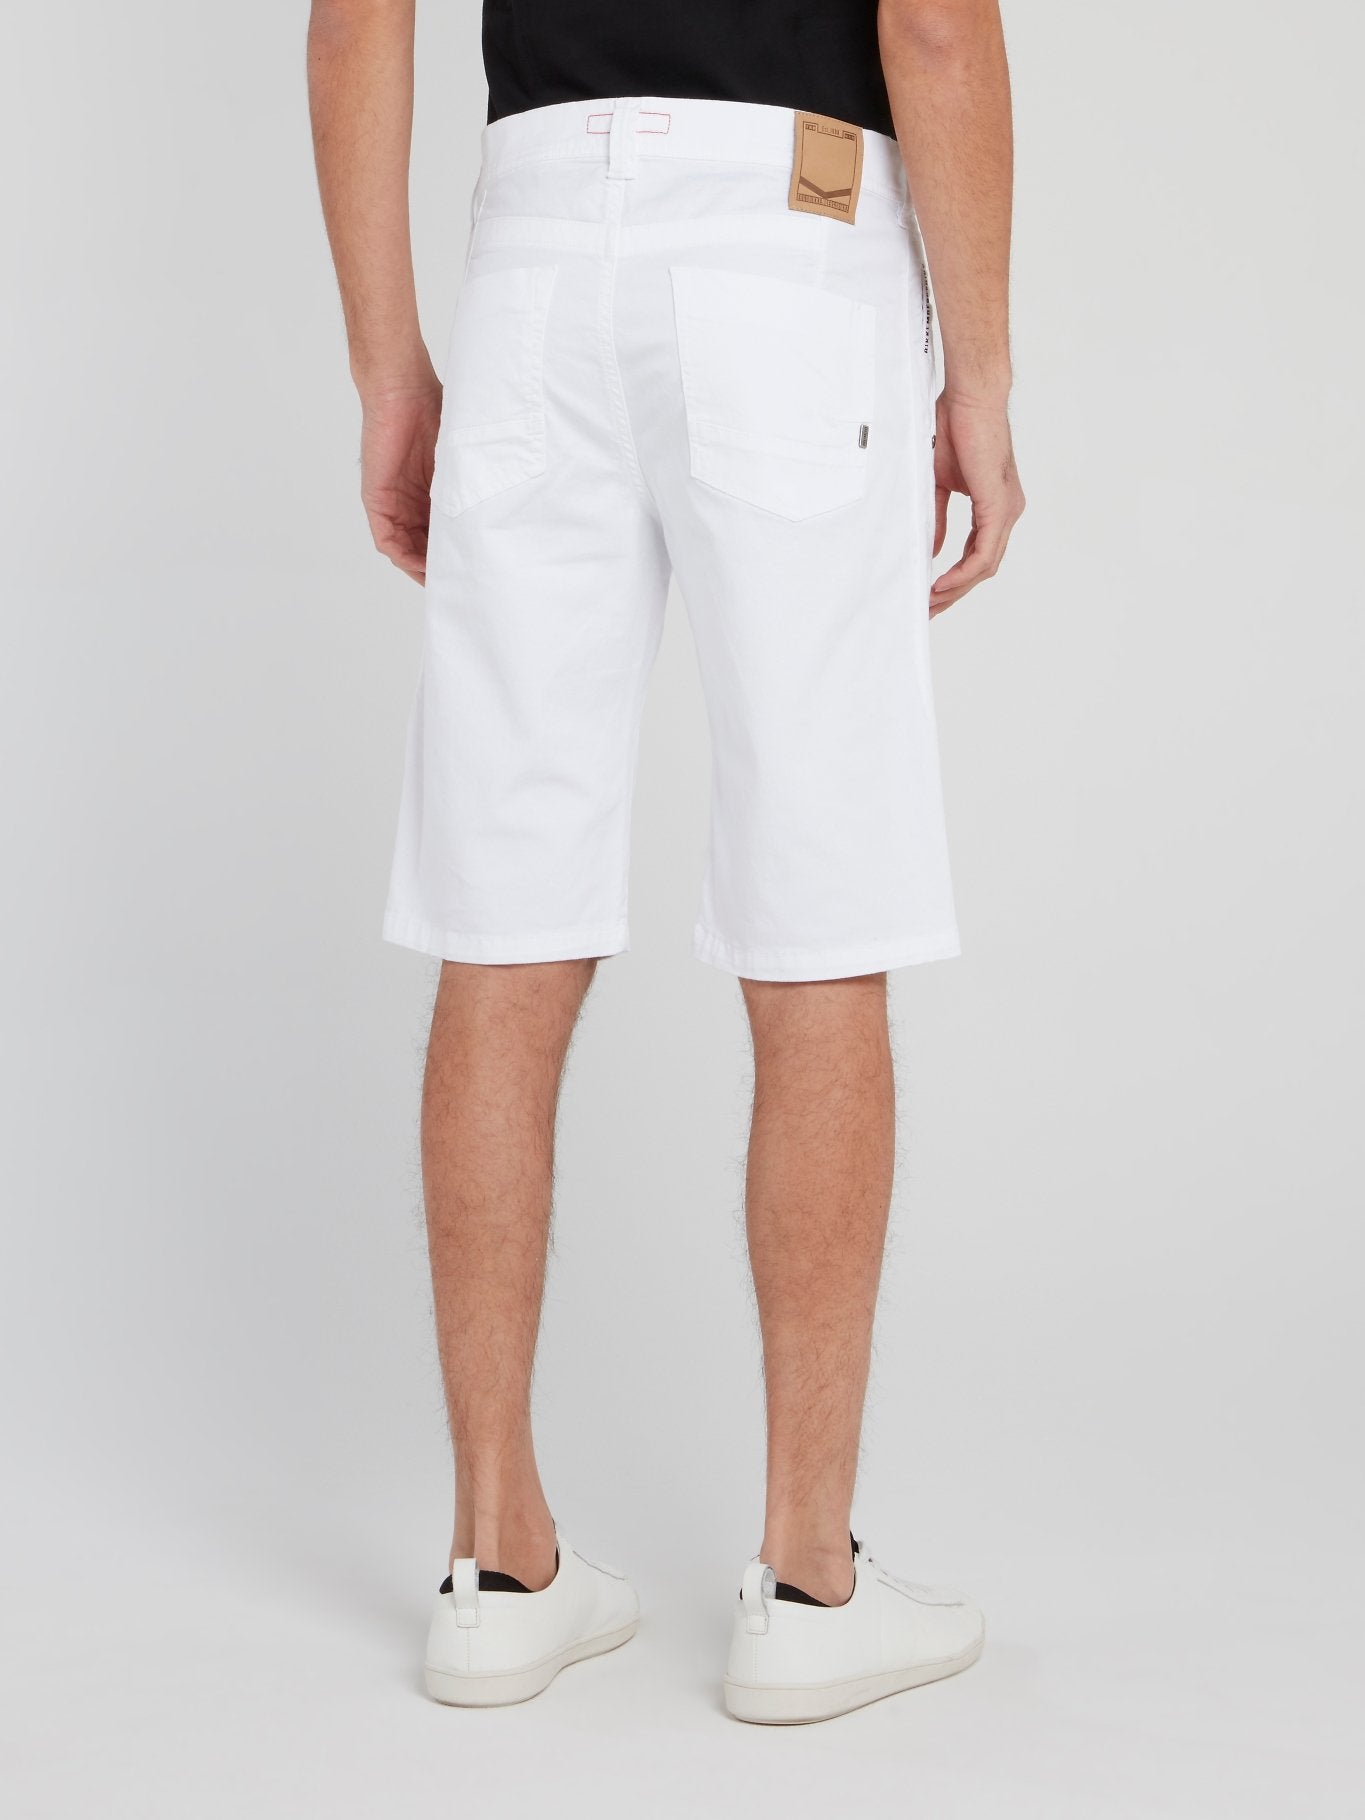 White Straight Cut Shorts